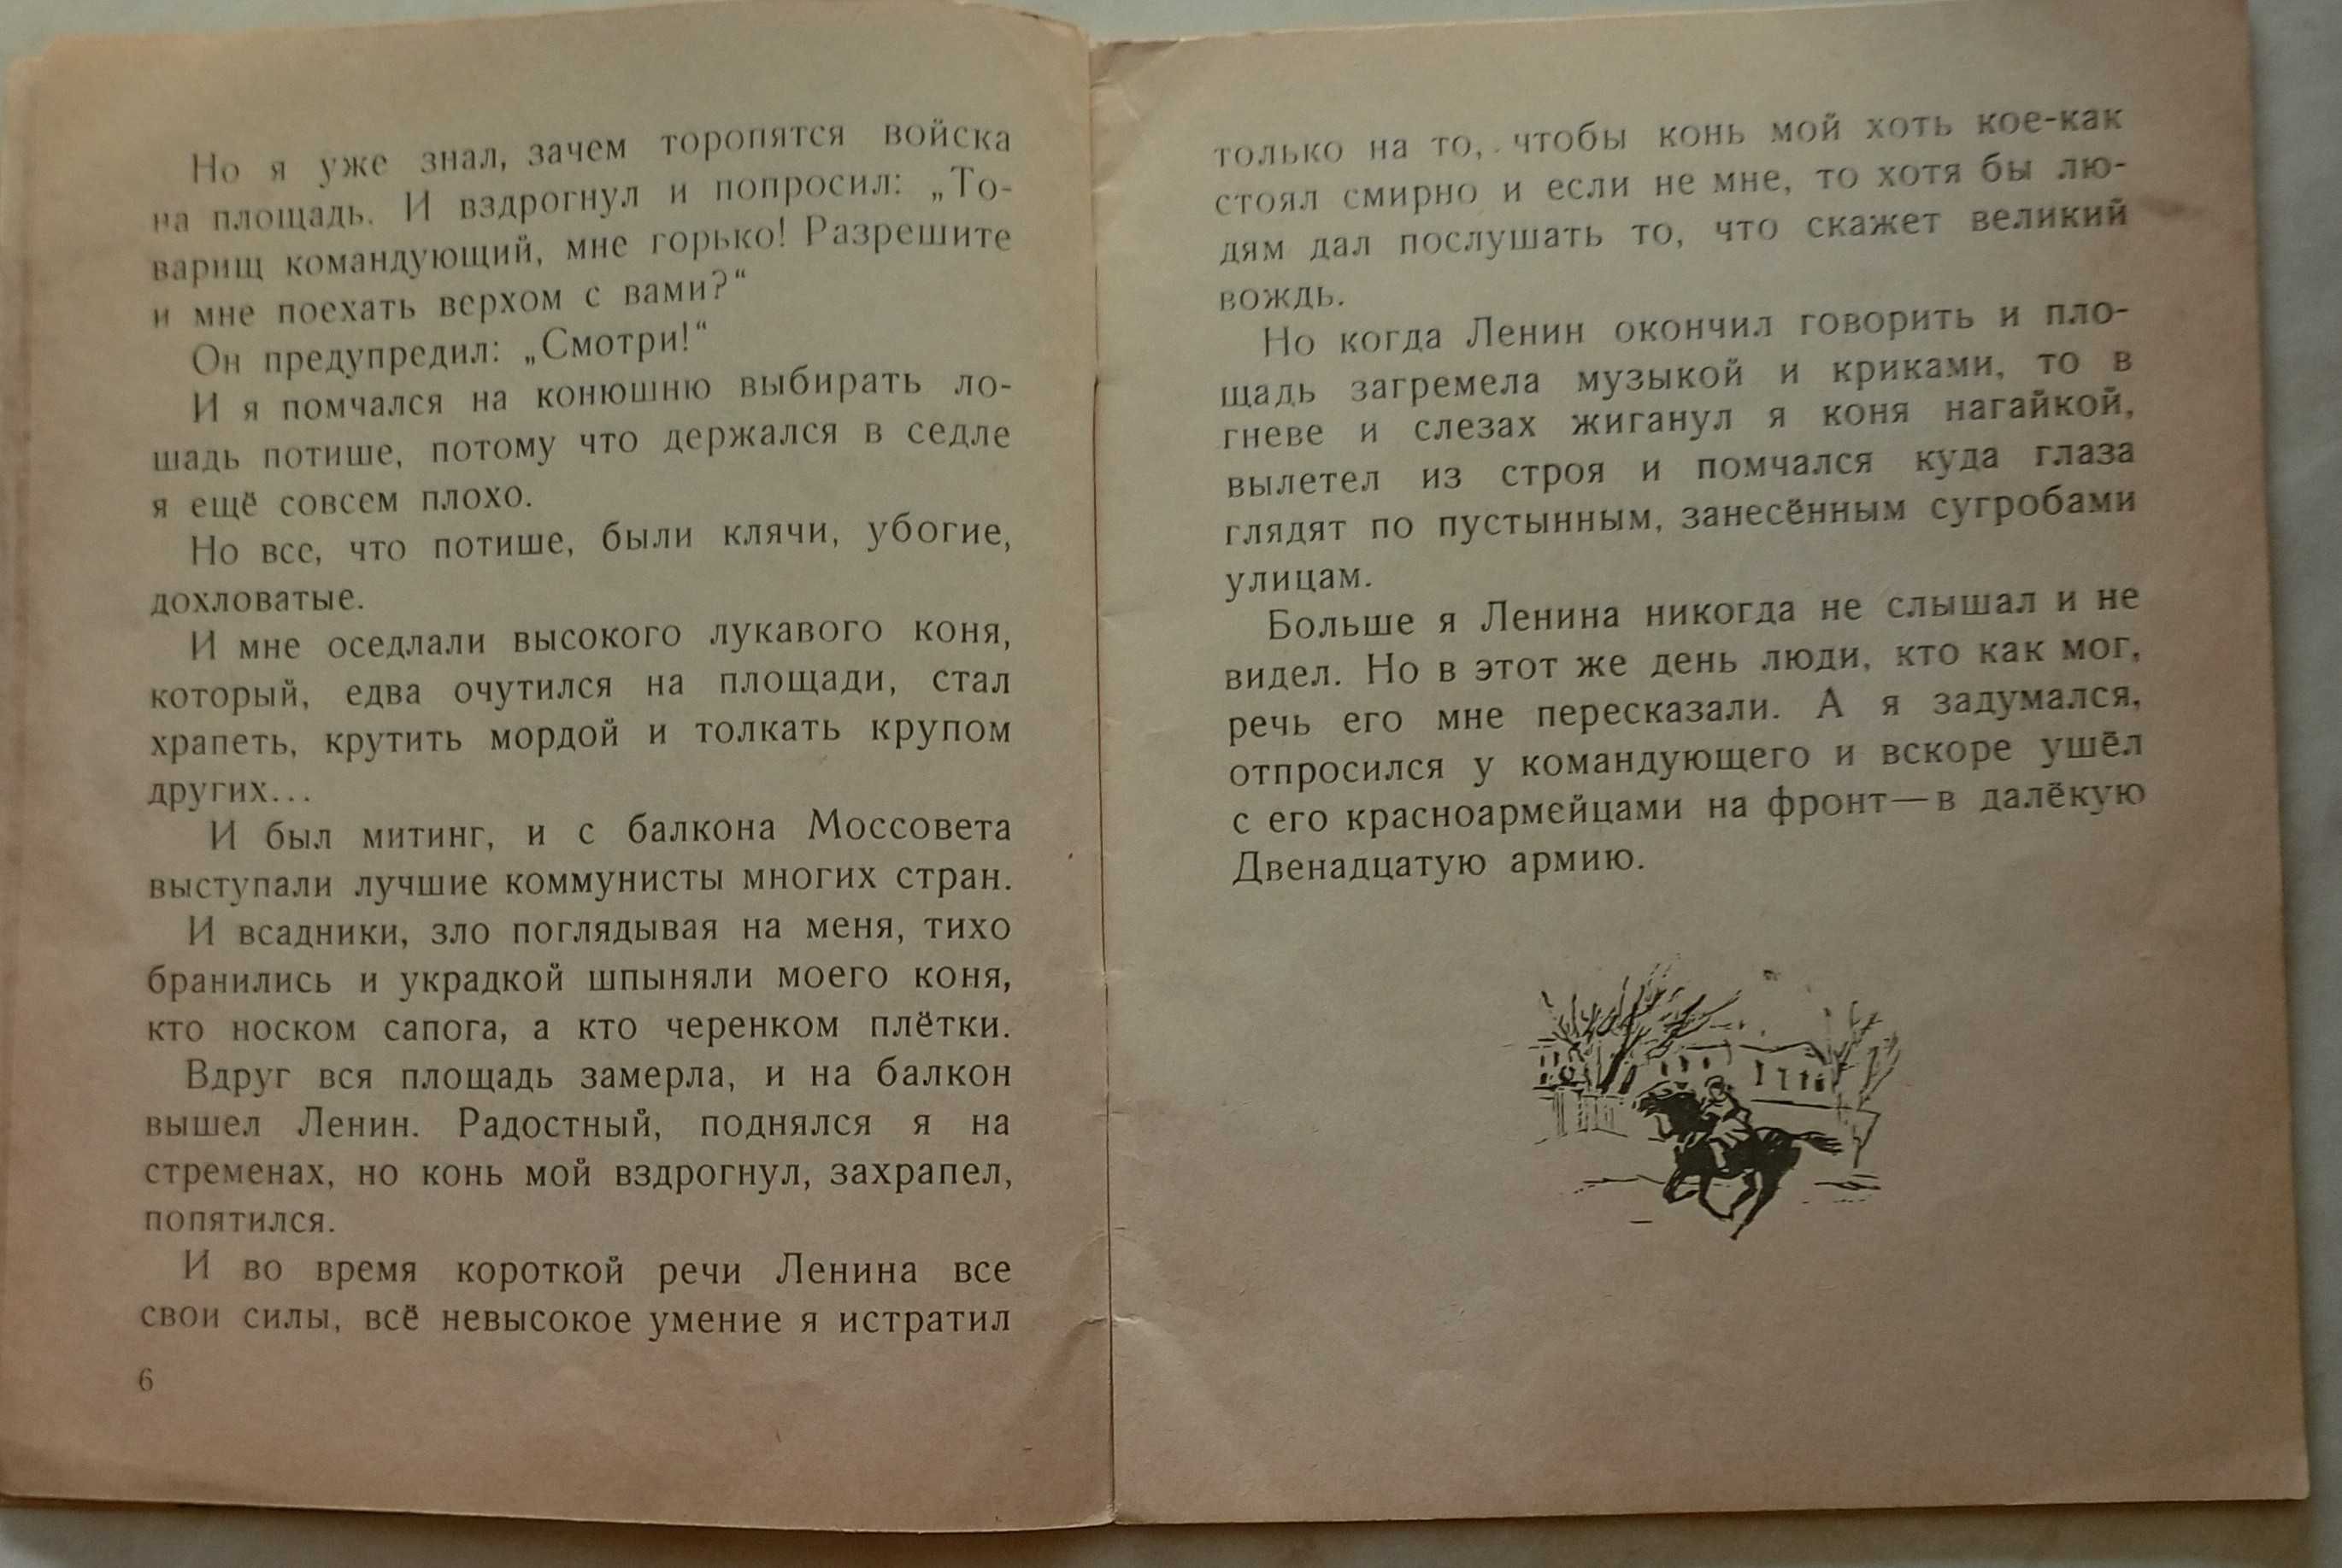 316а.28 Поход. Аркадий Гайдар 1965 год.рис. А. Ермолаева